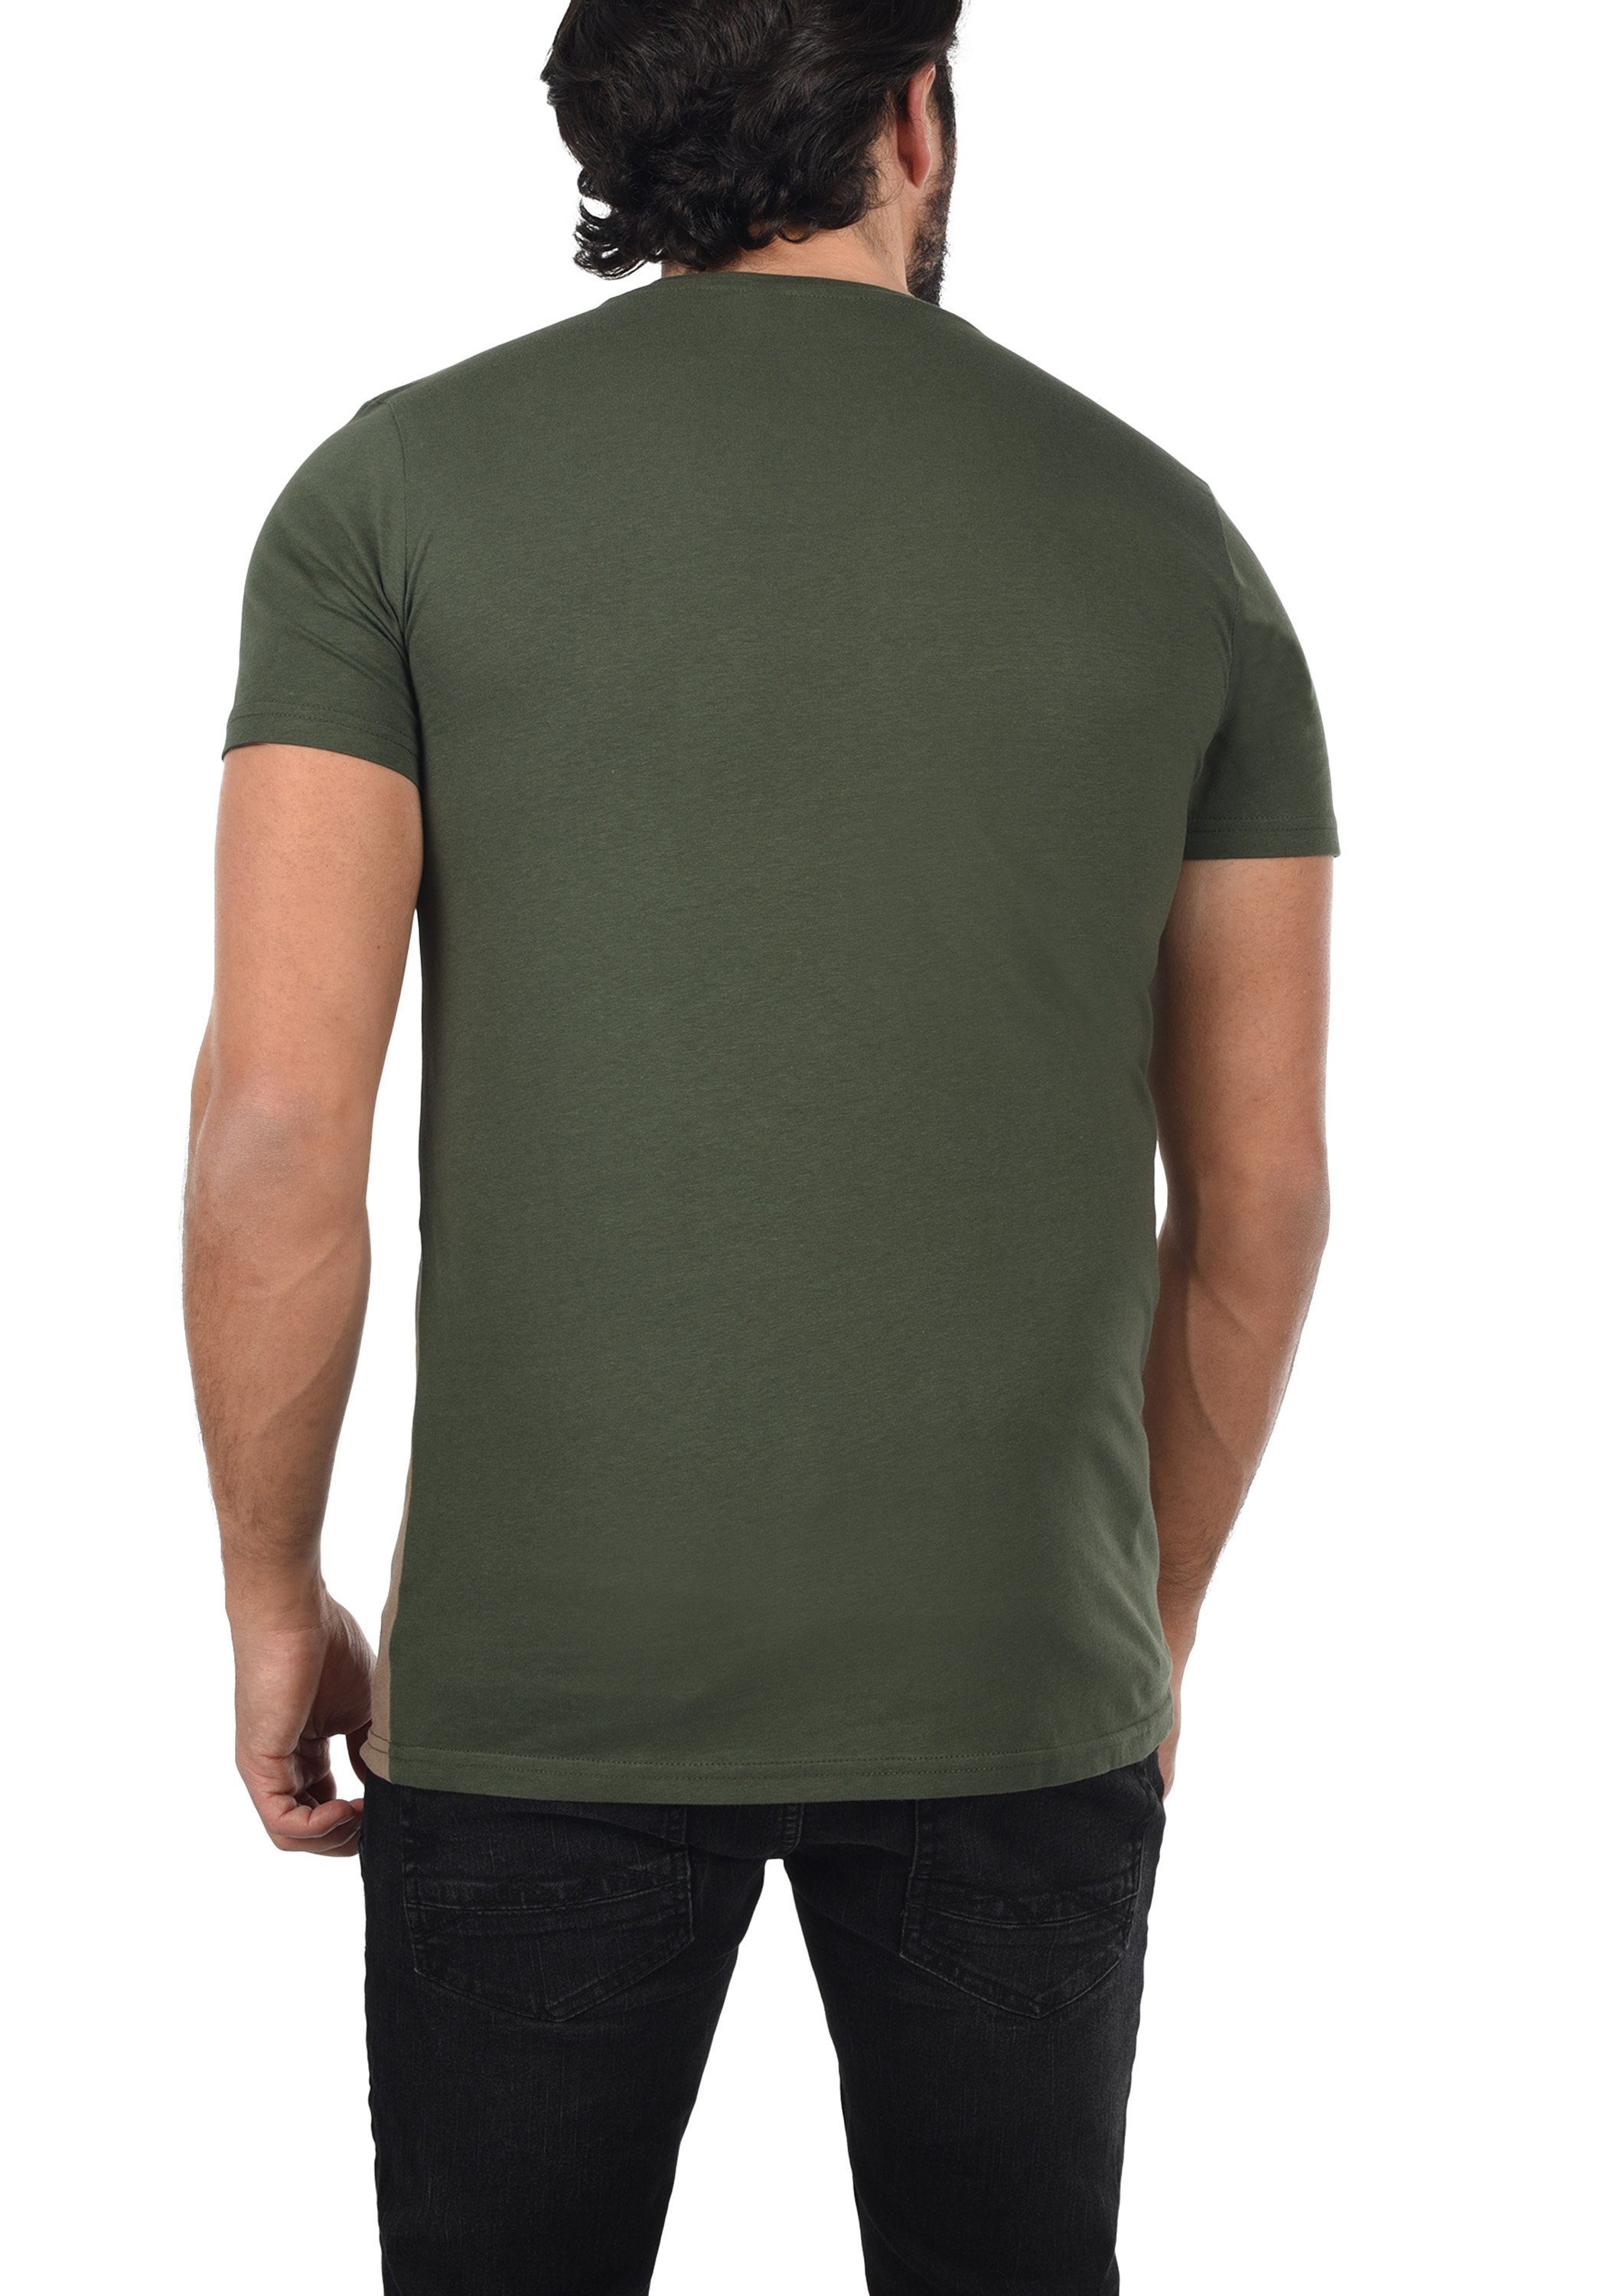 !Solid Ivy (3785) T-Shirt Rundhalsshirt Climb SDMingo